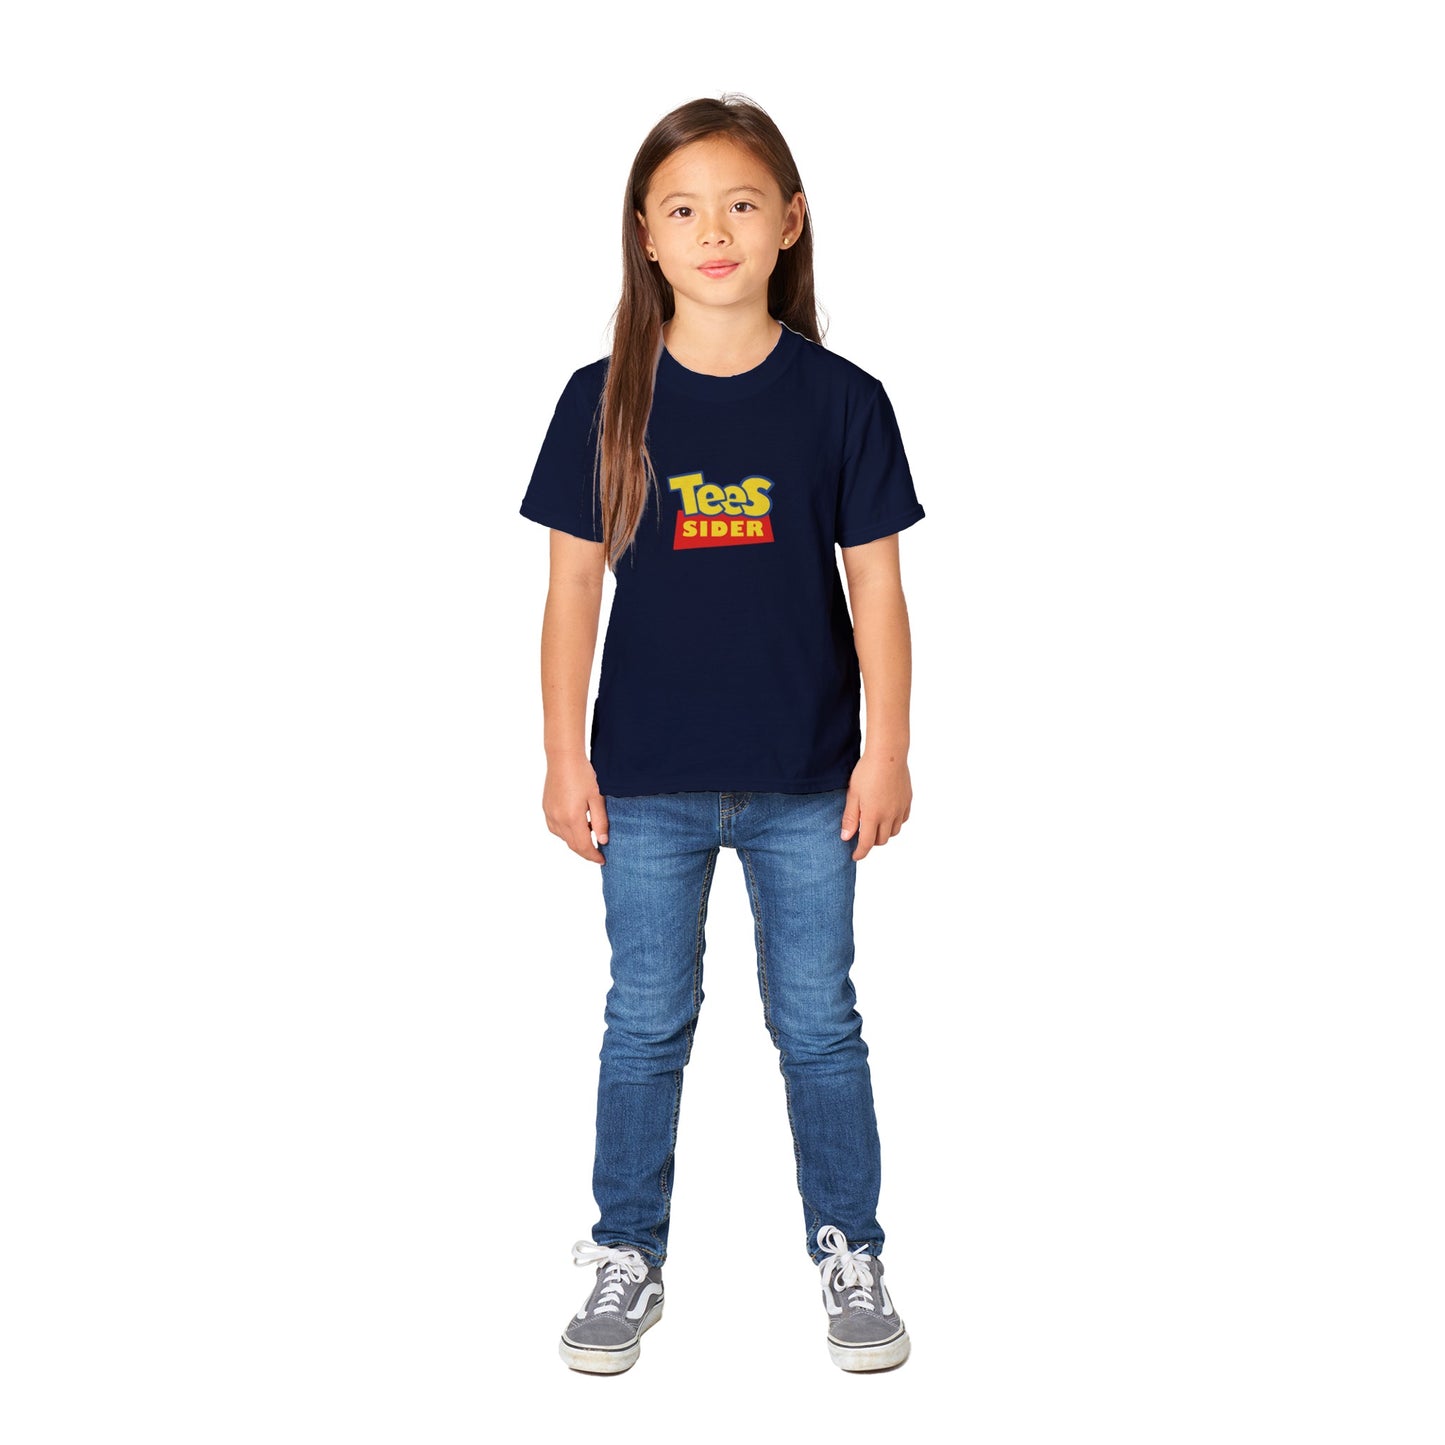 Teessider Toy Classic Kids Crewneck T-shirt